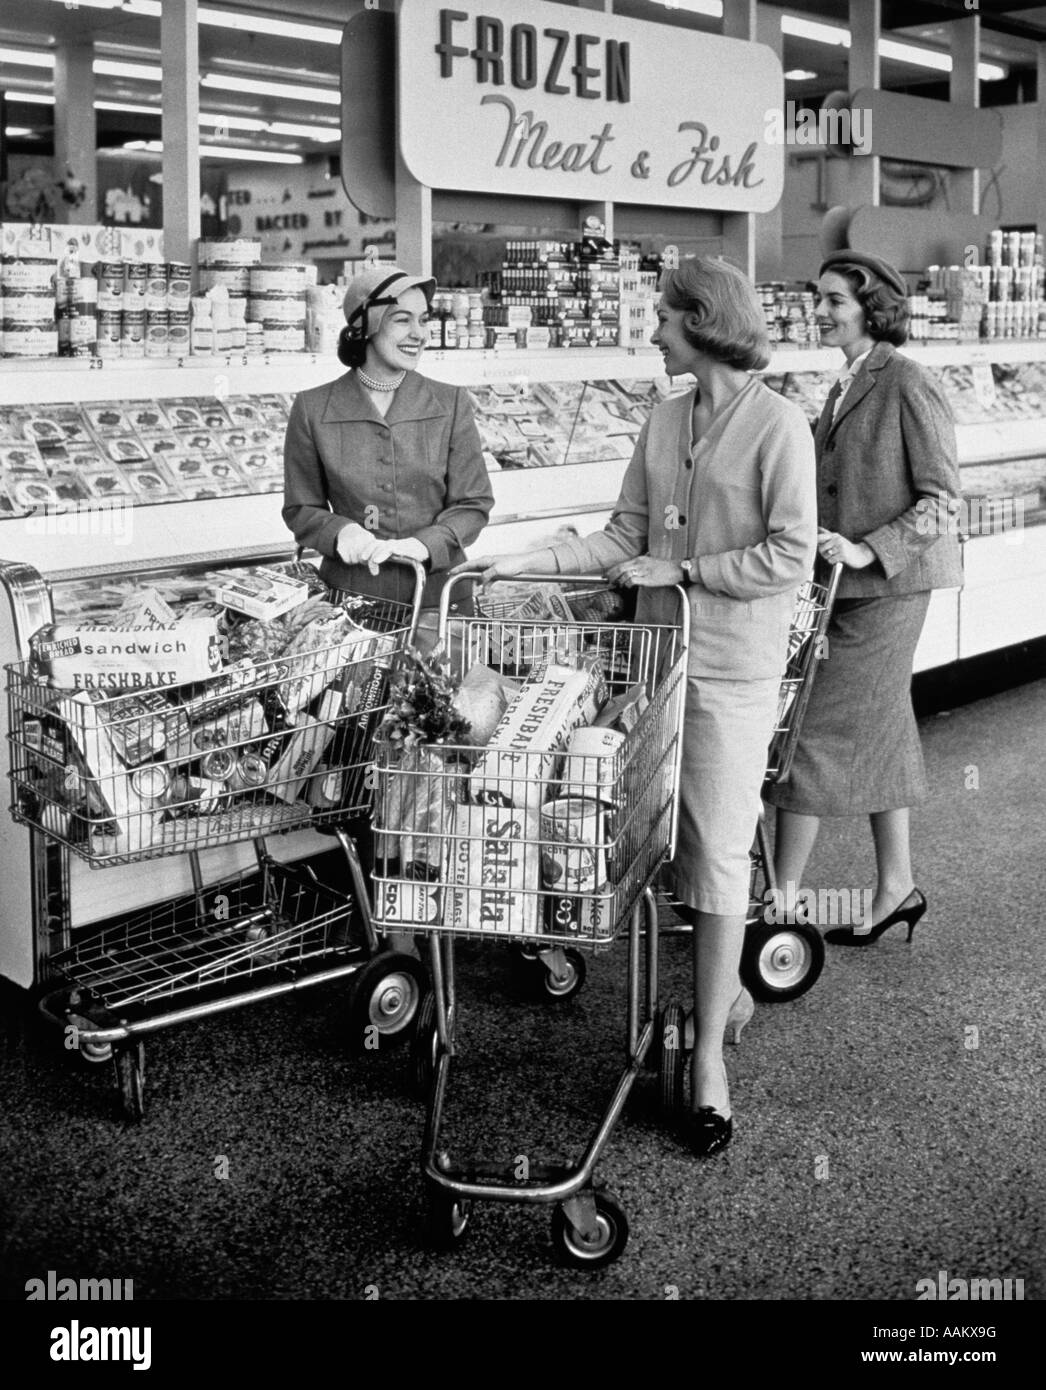 1950s THREE WOMEN PUSHING SHOPPING CARTS MEETING TALKING IN FROZEN FOOD AISLE OF SUPERMARKET Stock Photo